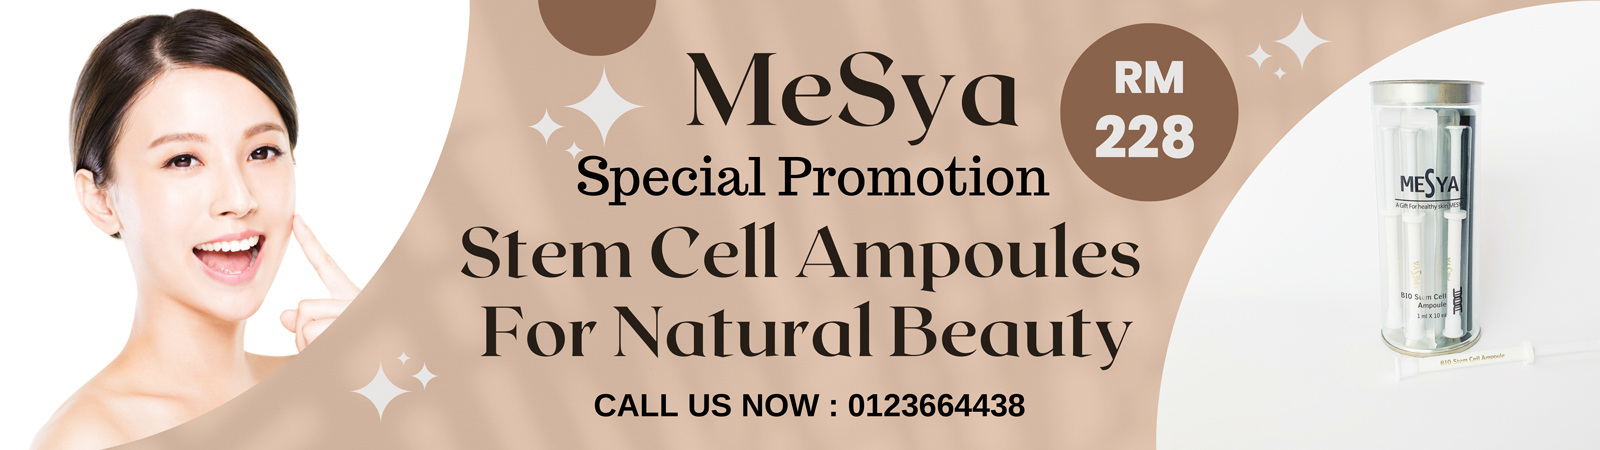 Mesya Bio Stem Cell Ampoules